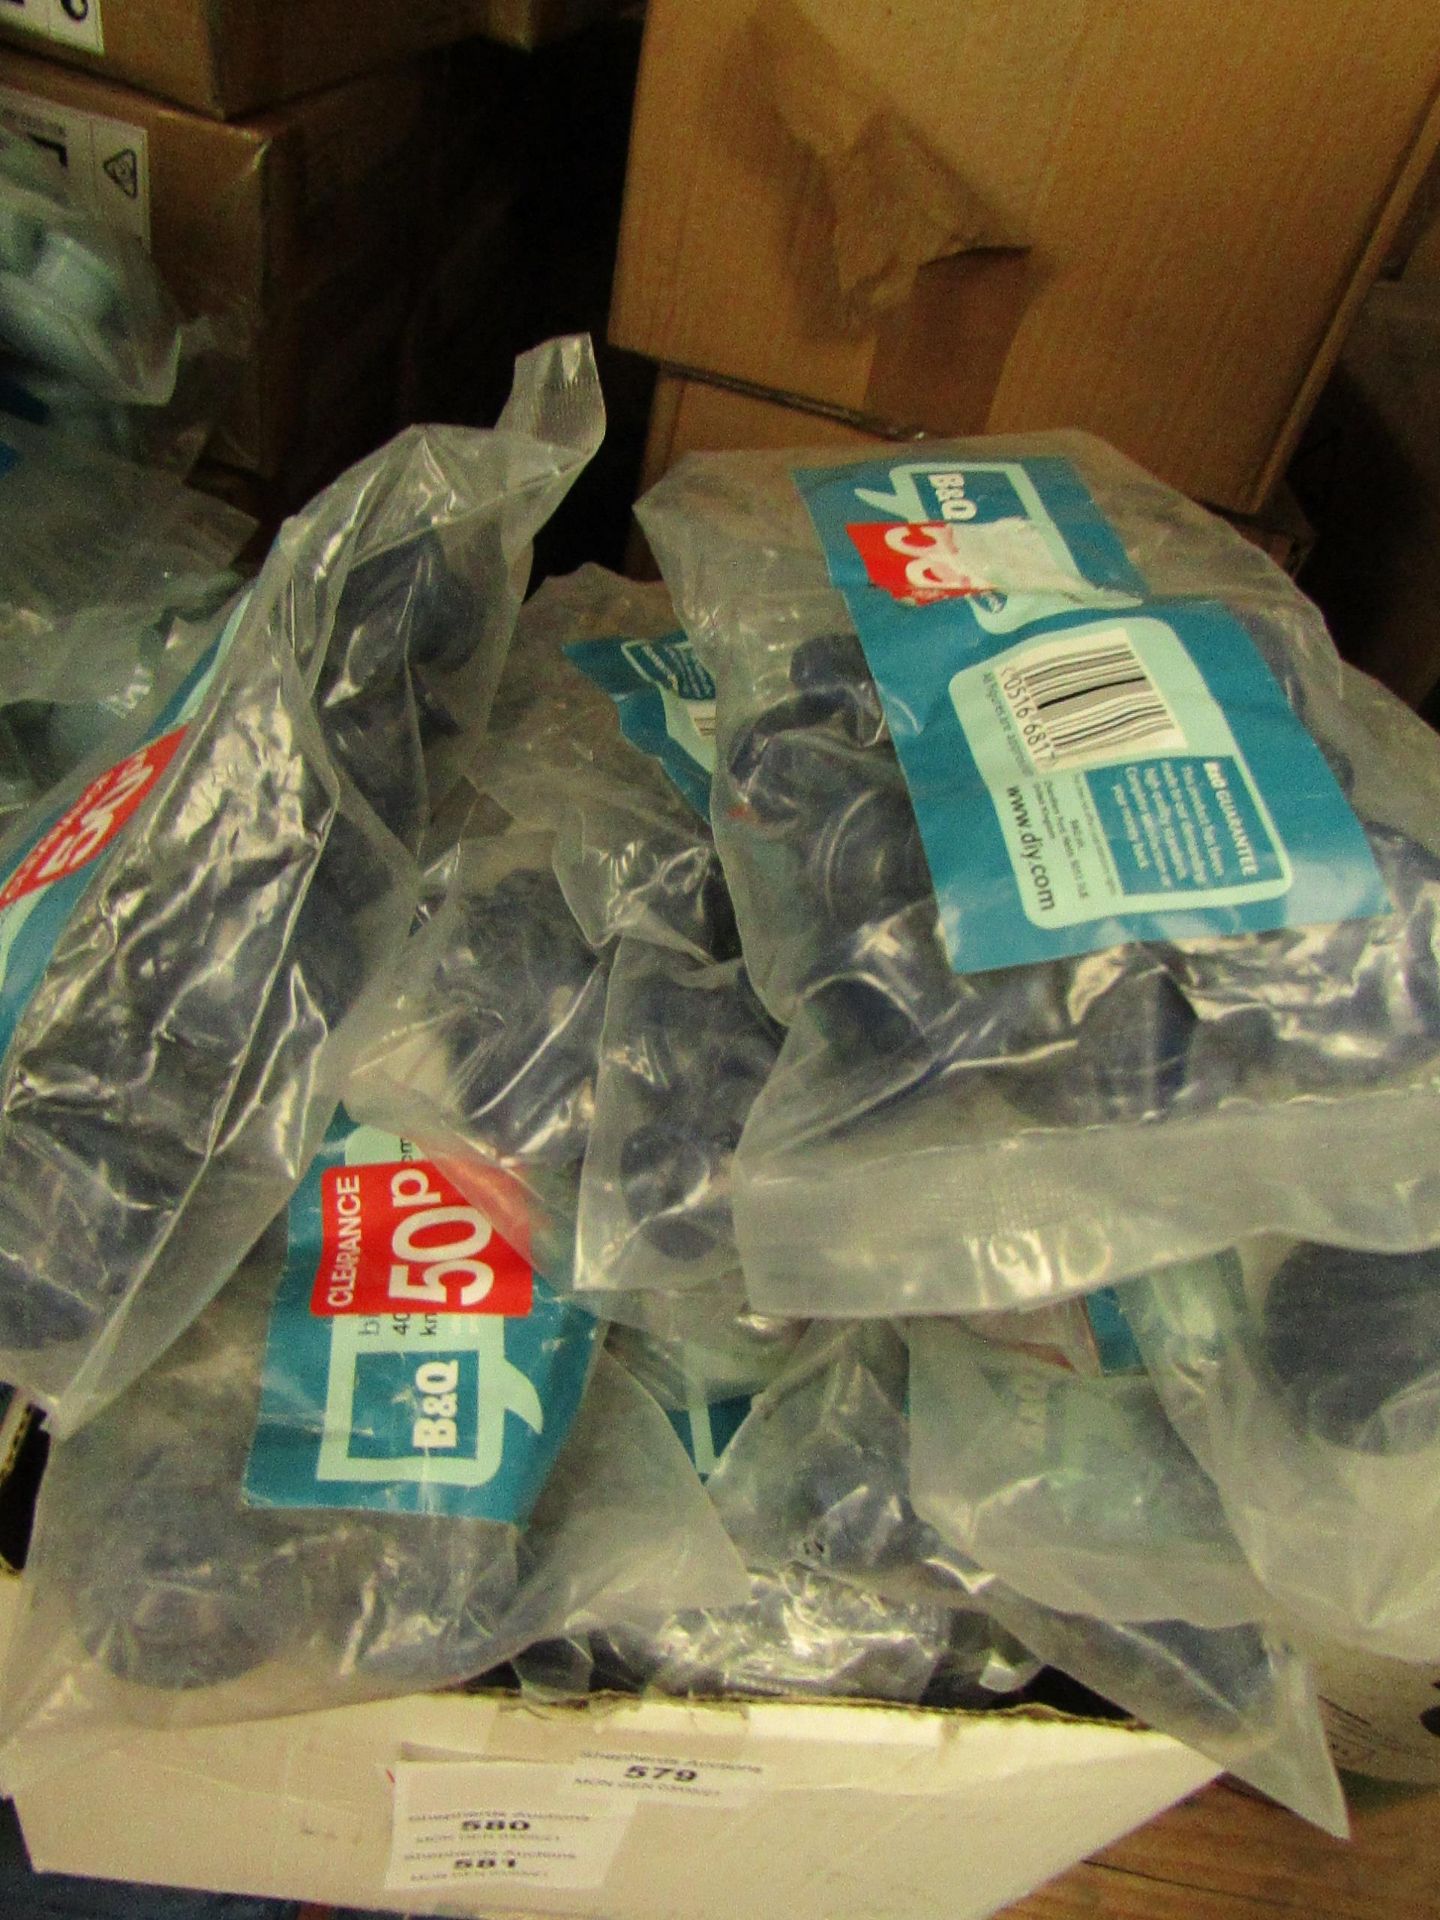 5x B&Q - Royal Blue Plastic Knobs (Packs of 10) - Unused & Packaged.